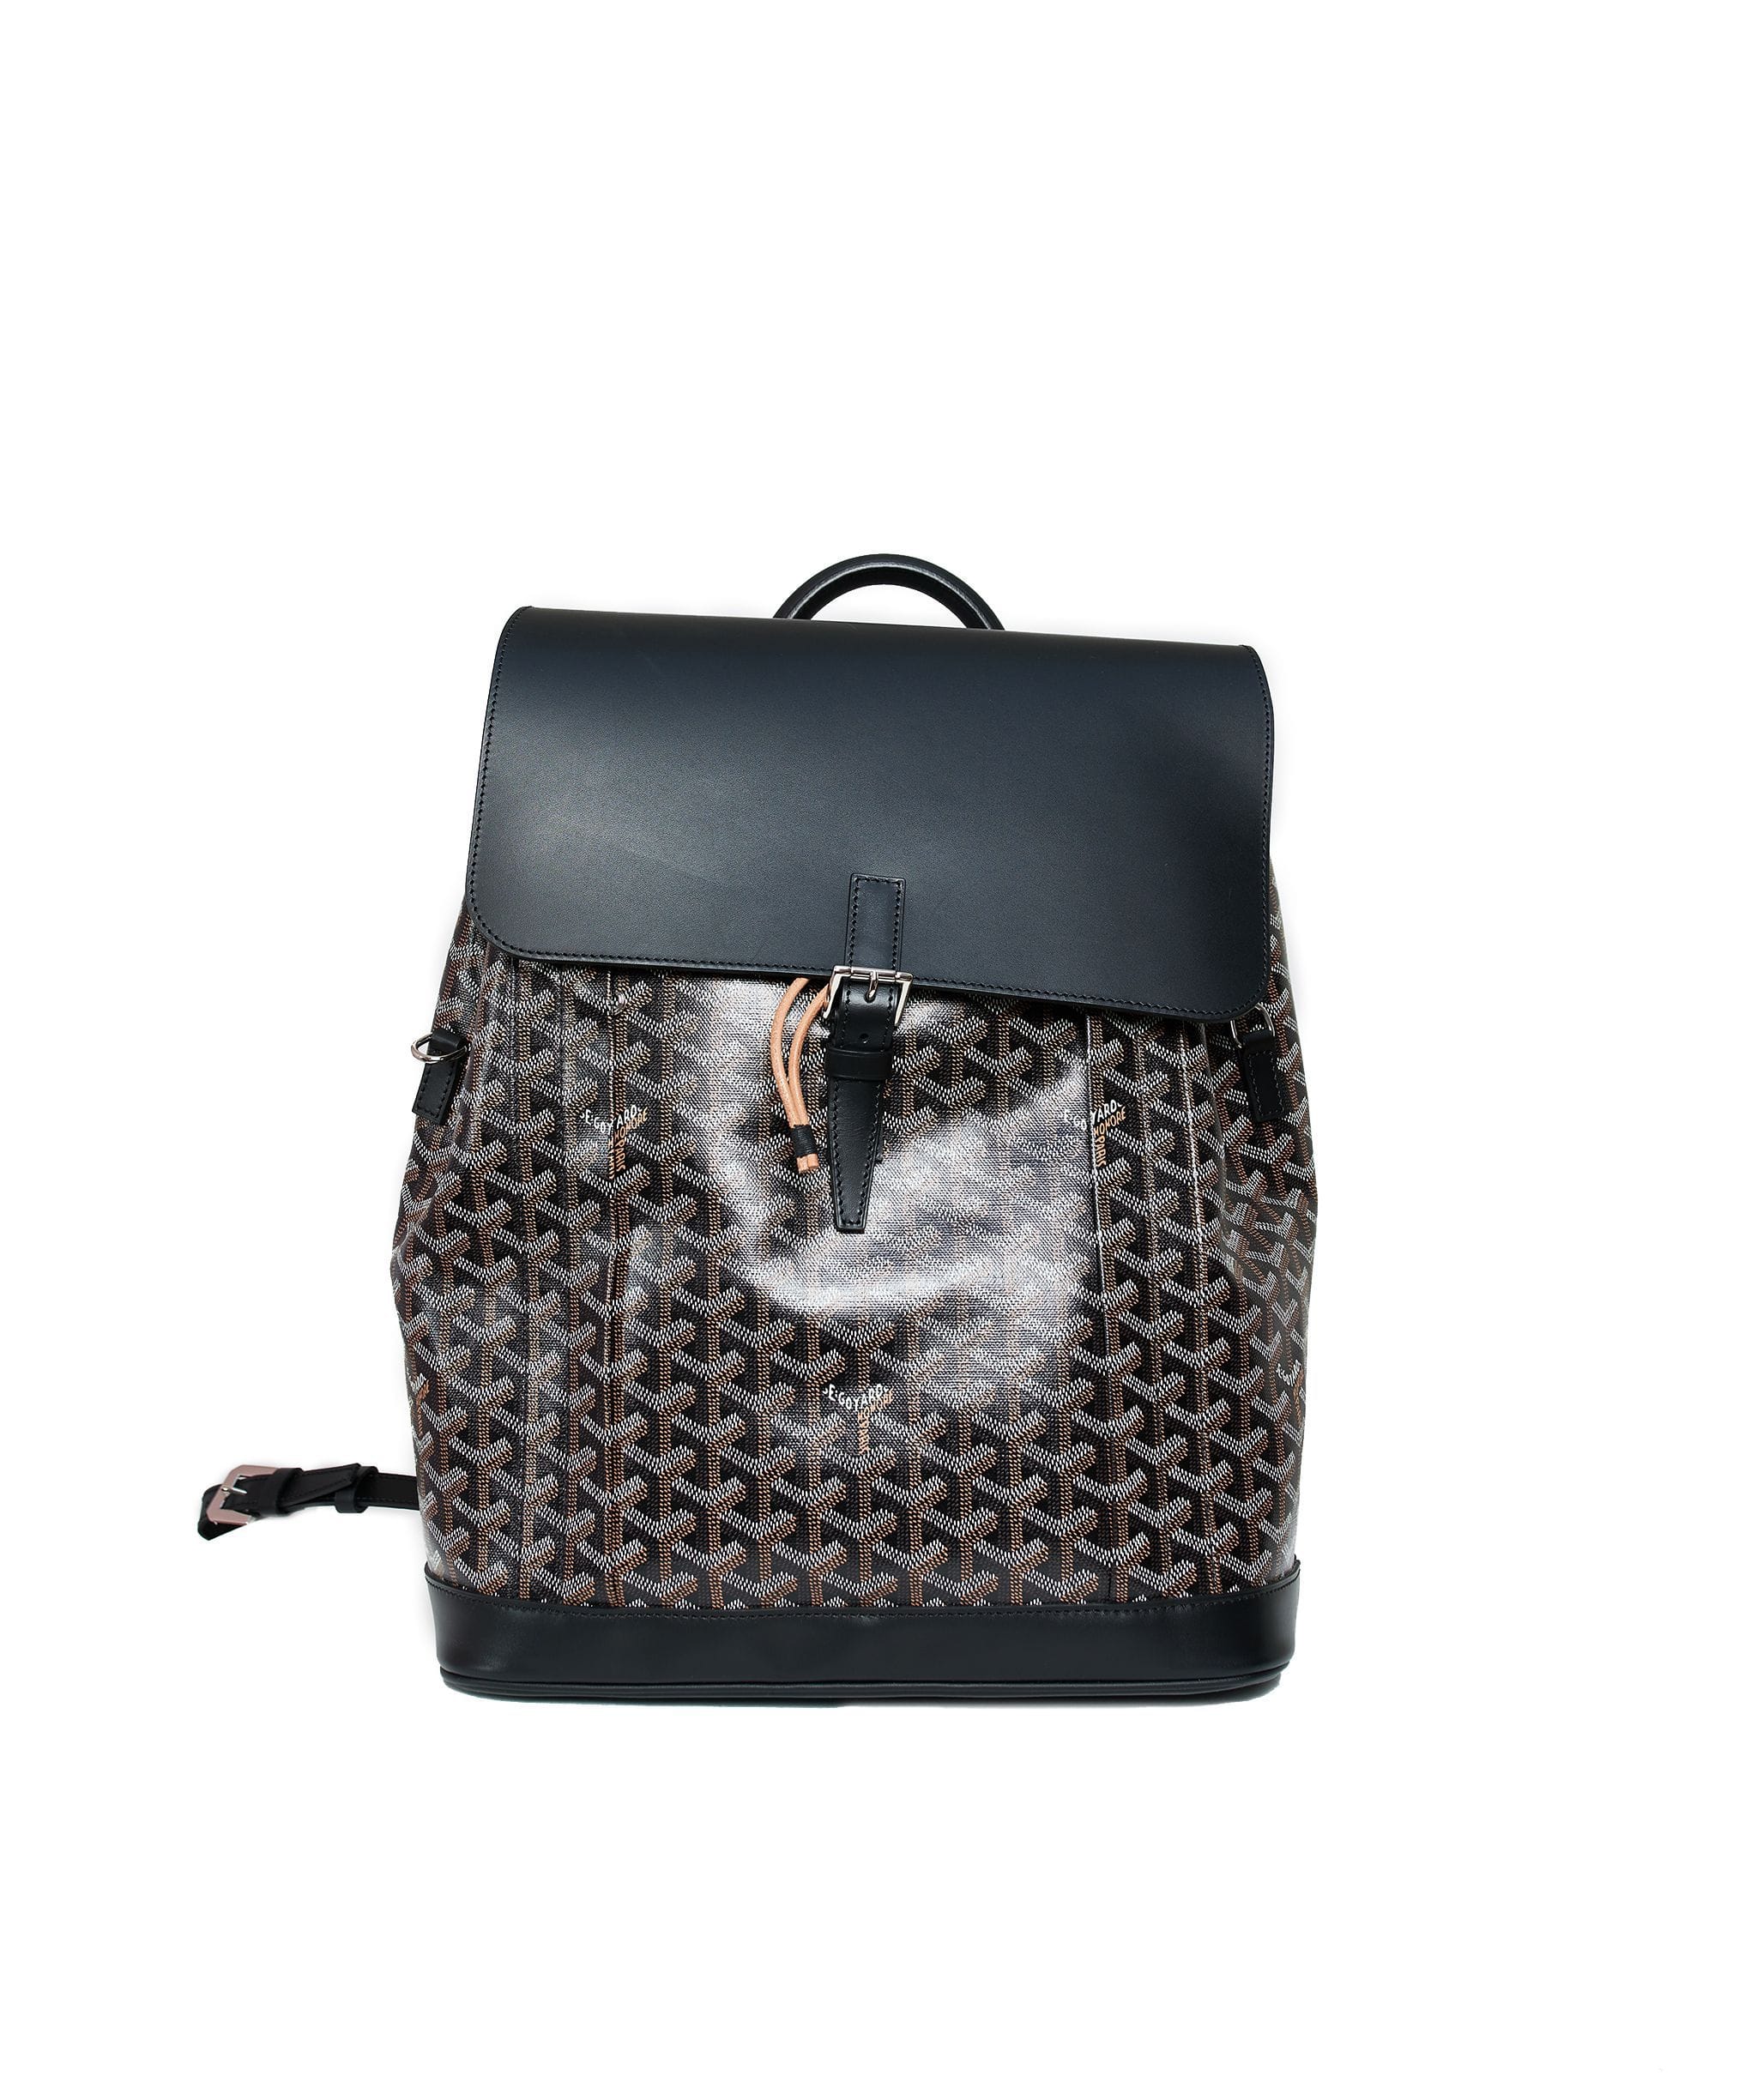 Luxury Promise Goyard Alpine Backpack in black